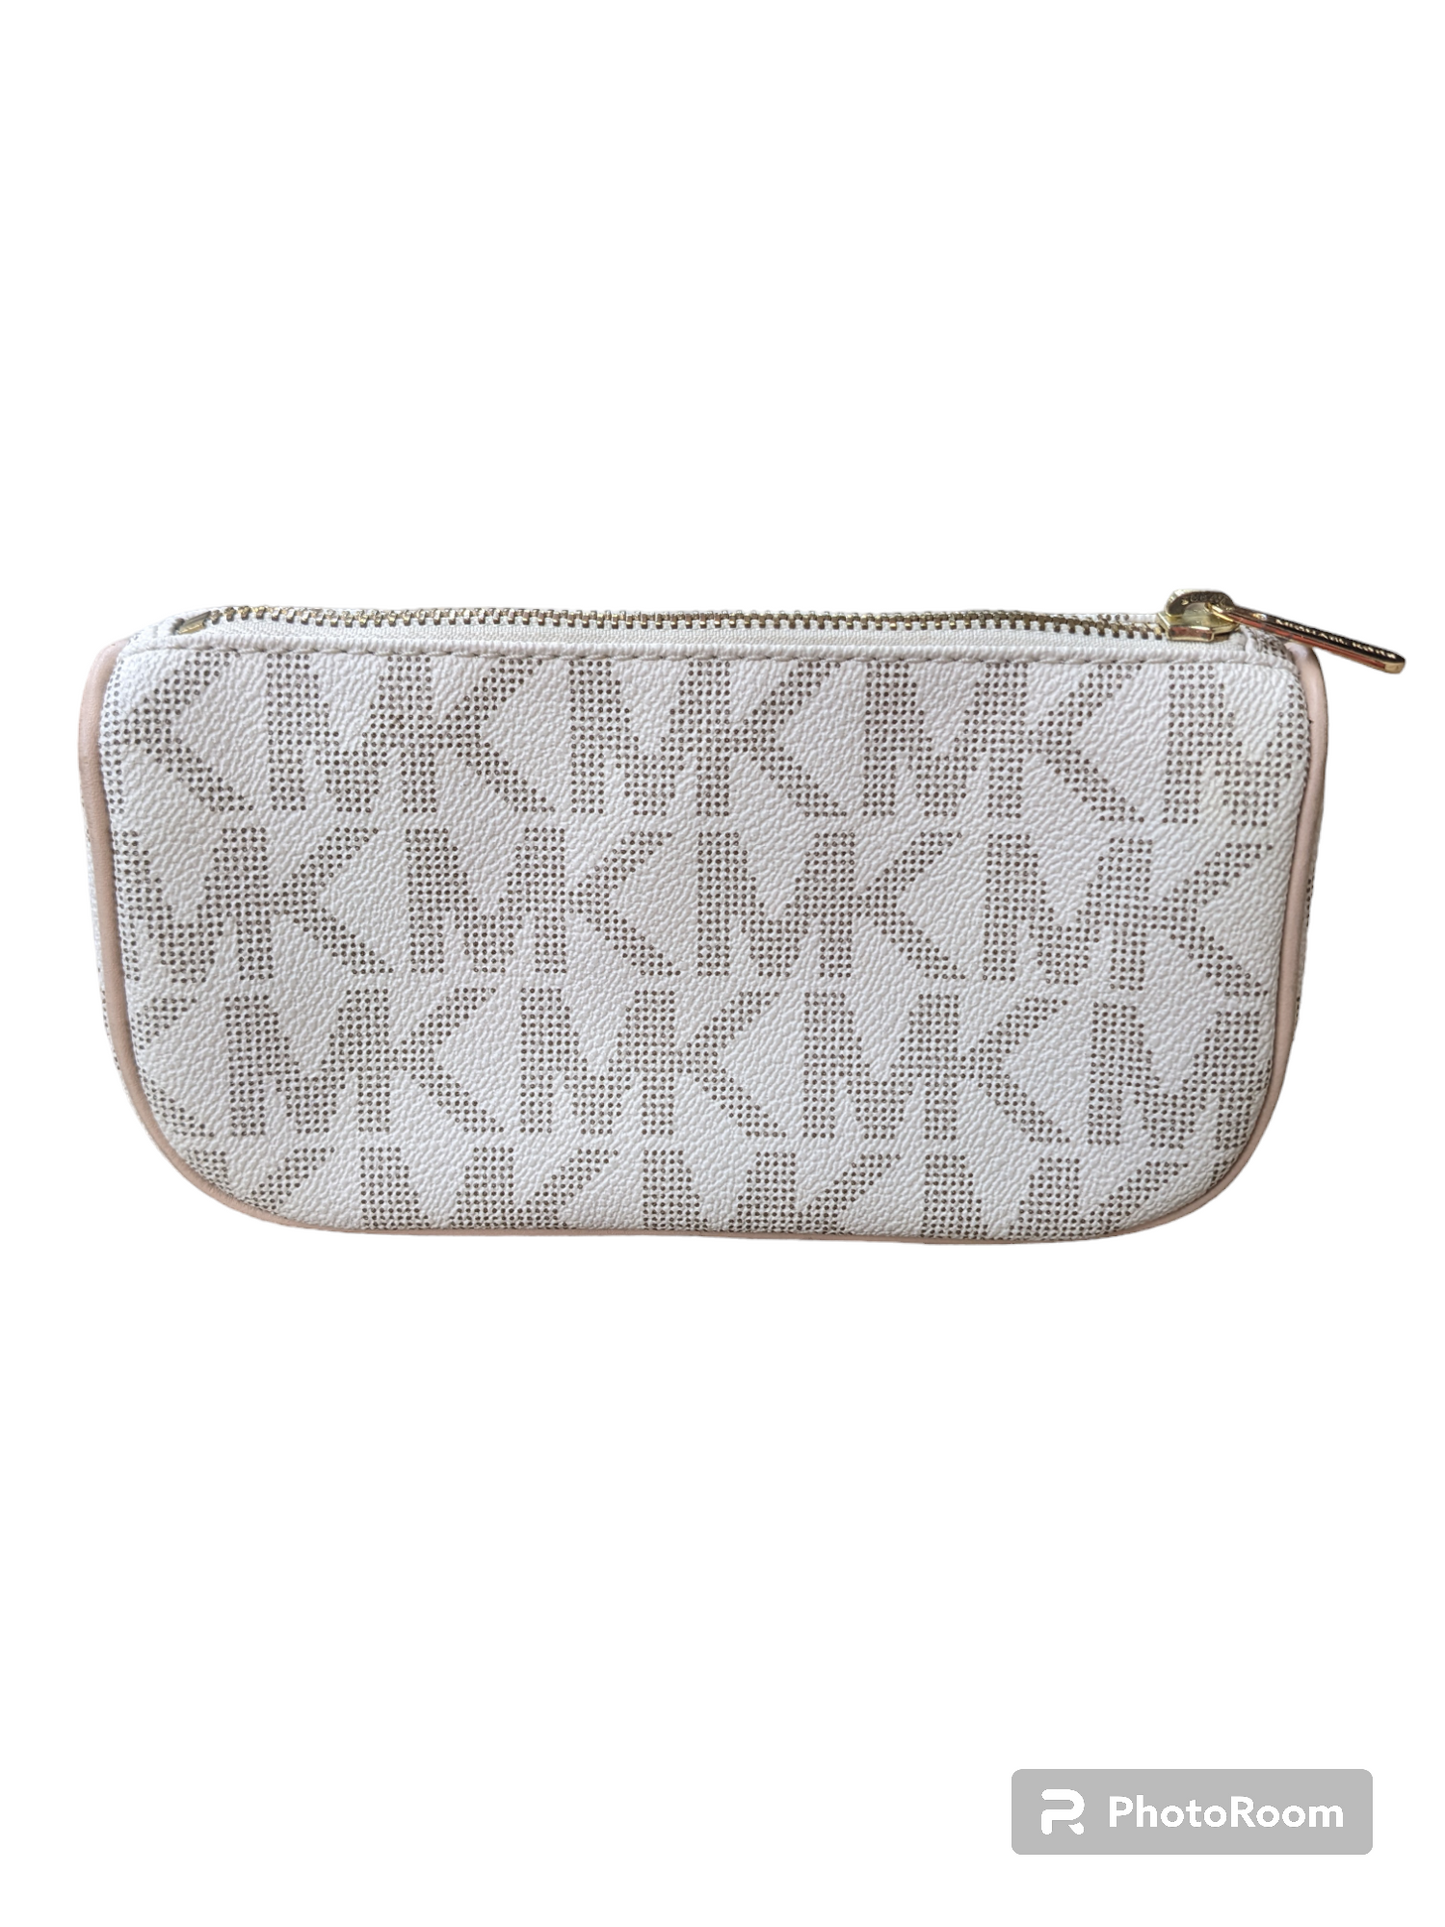 Makeup Bag By Michael Kors  Size: Small